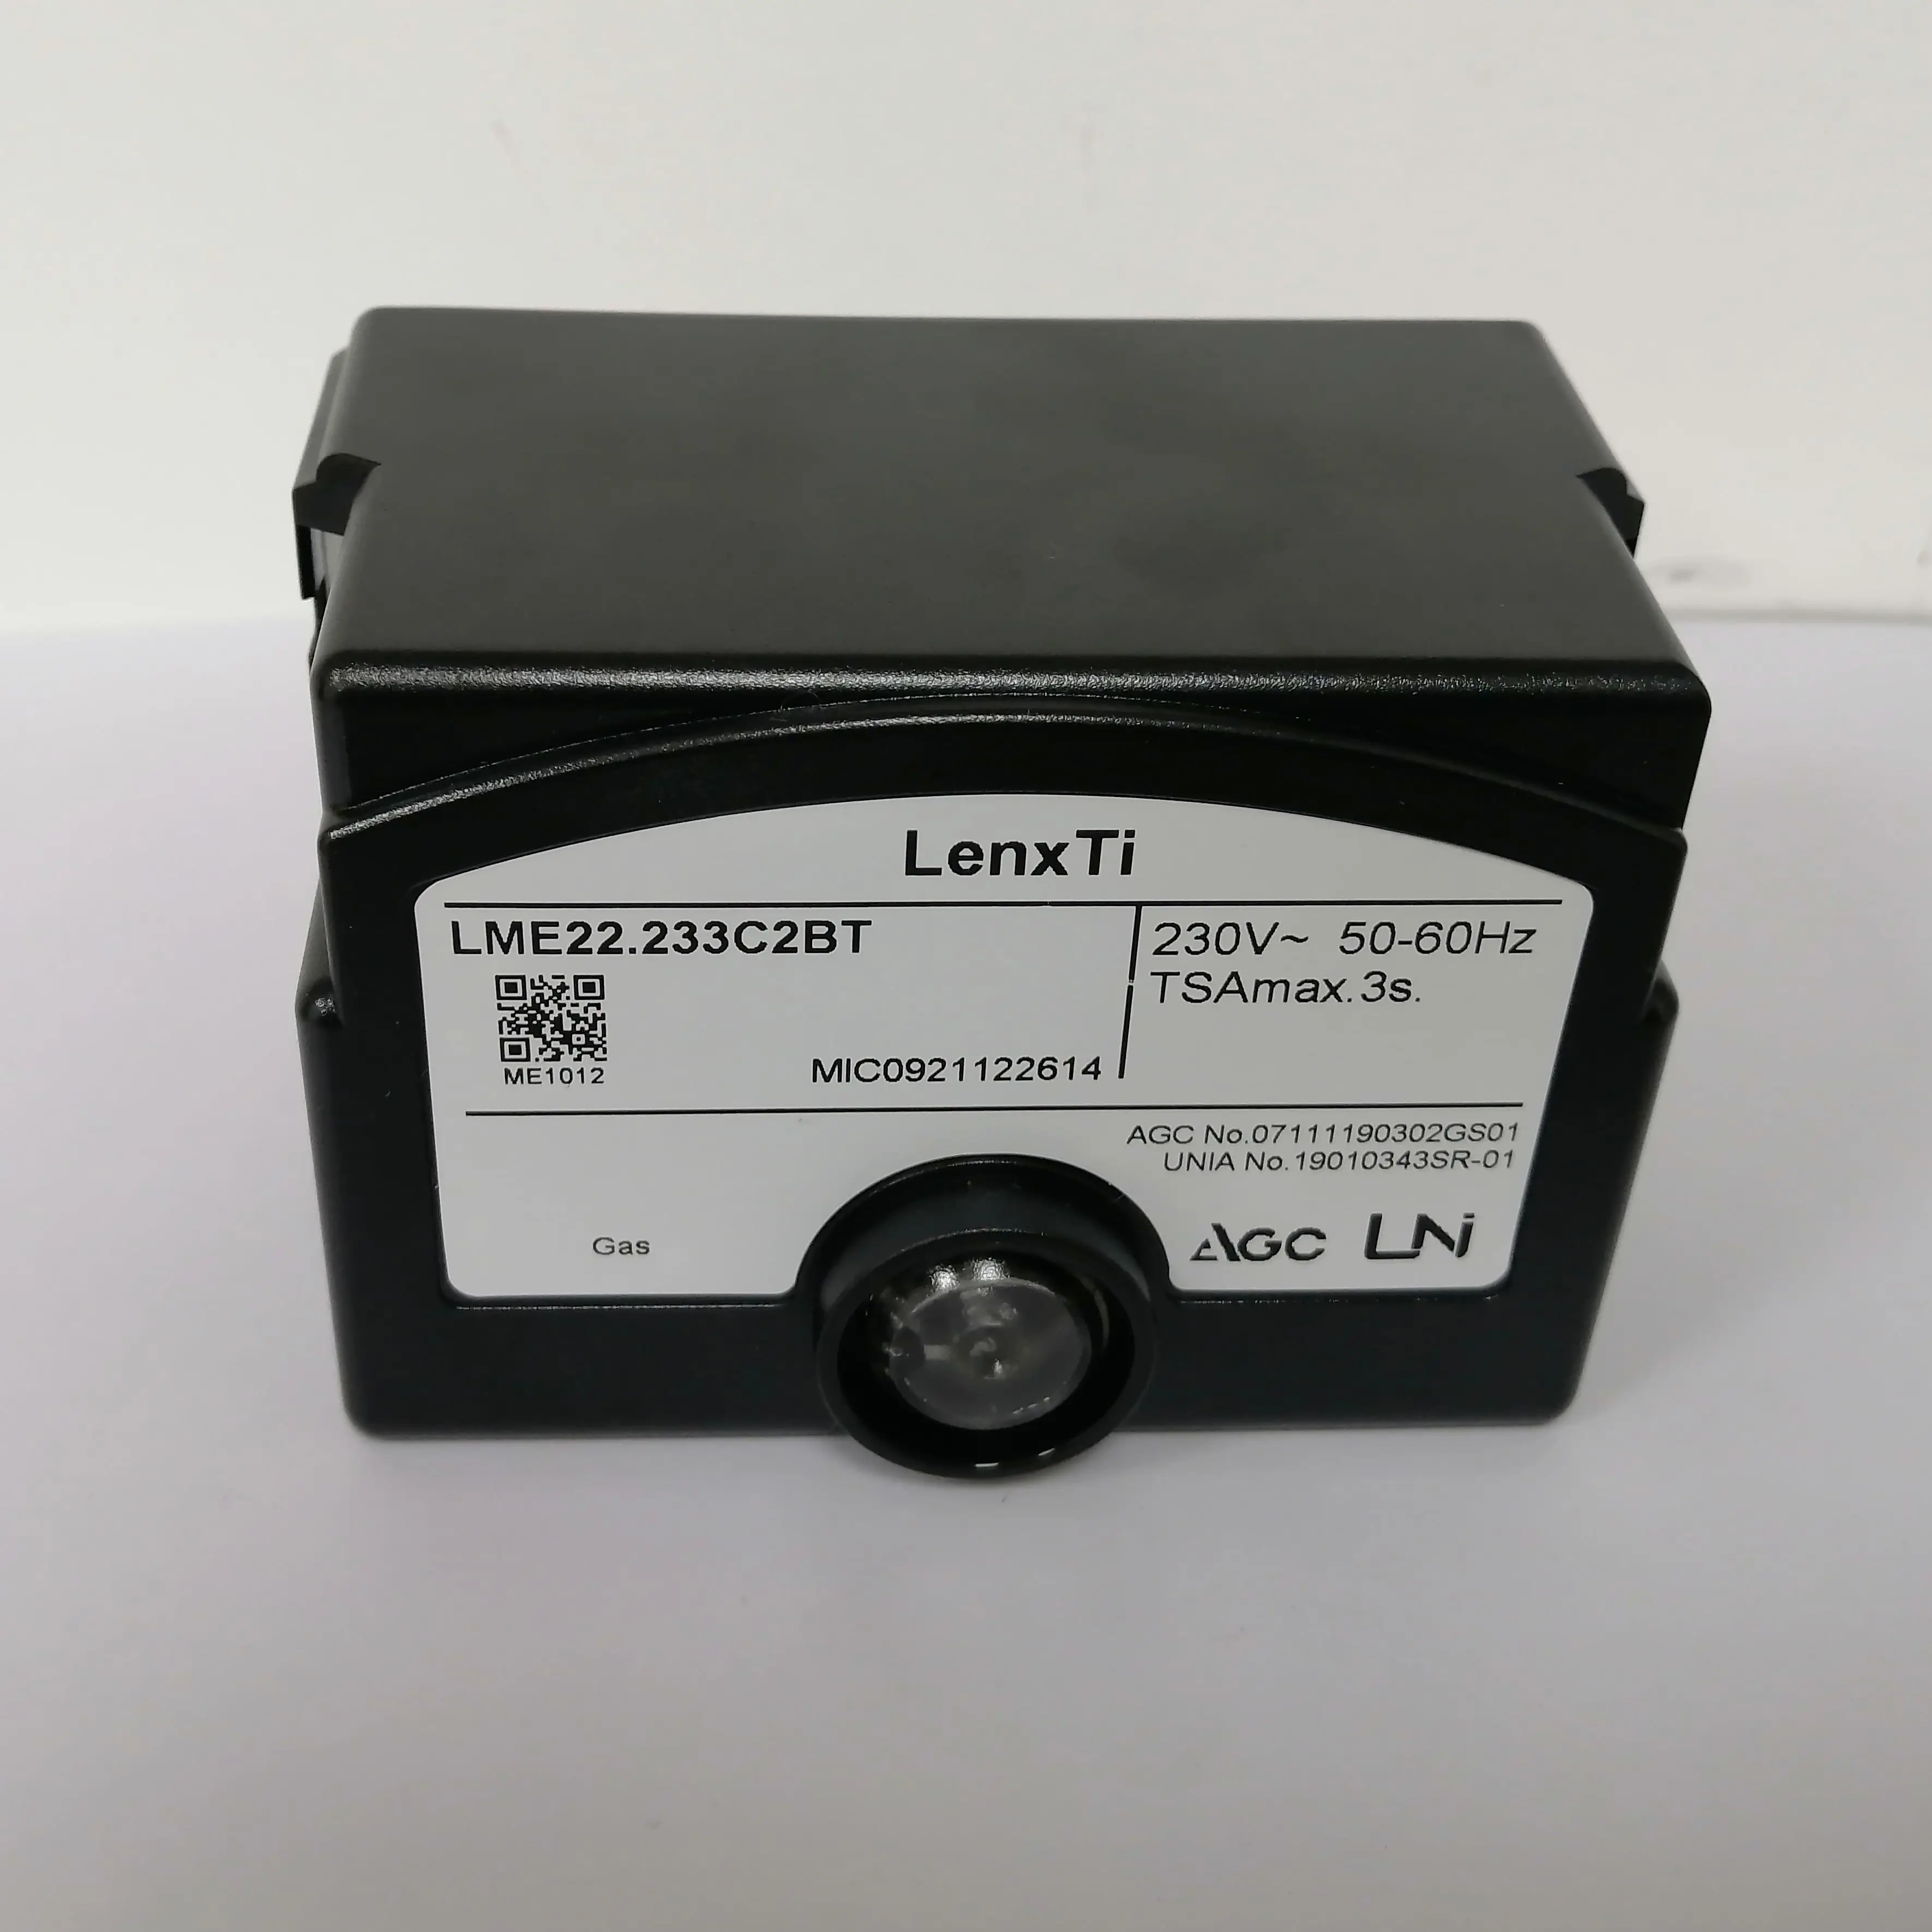 LME22.233C2|LMG22.233B27|LenxTi|LME22.233C2BT Burner controls for 2-stage burners, with actuator control